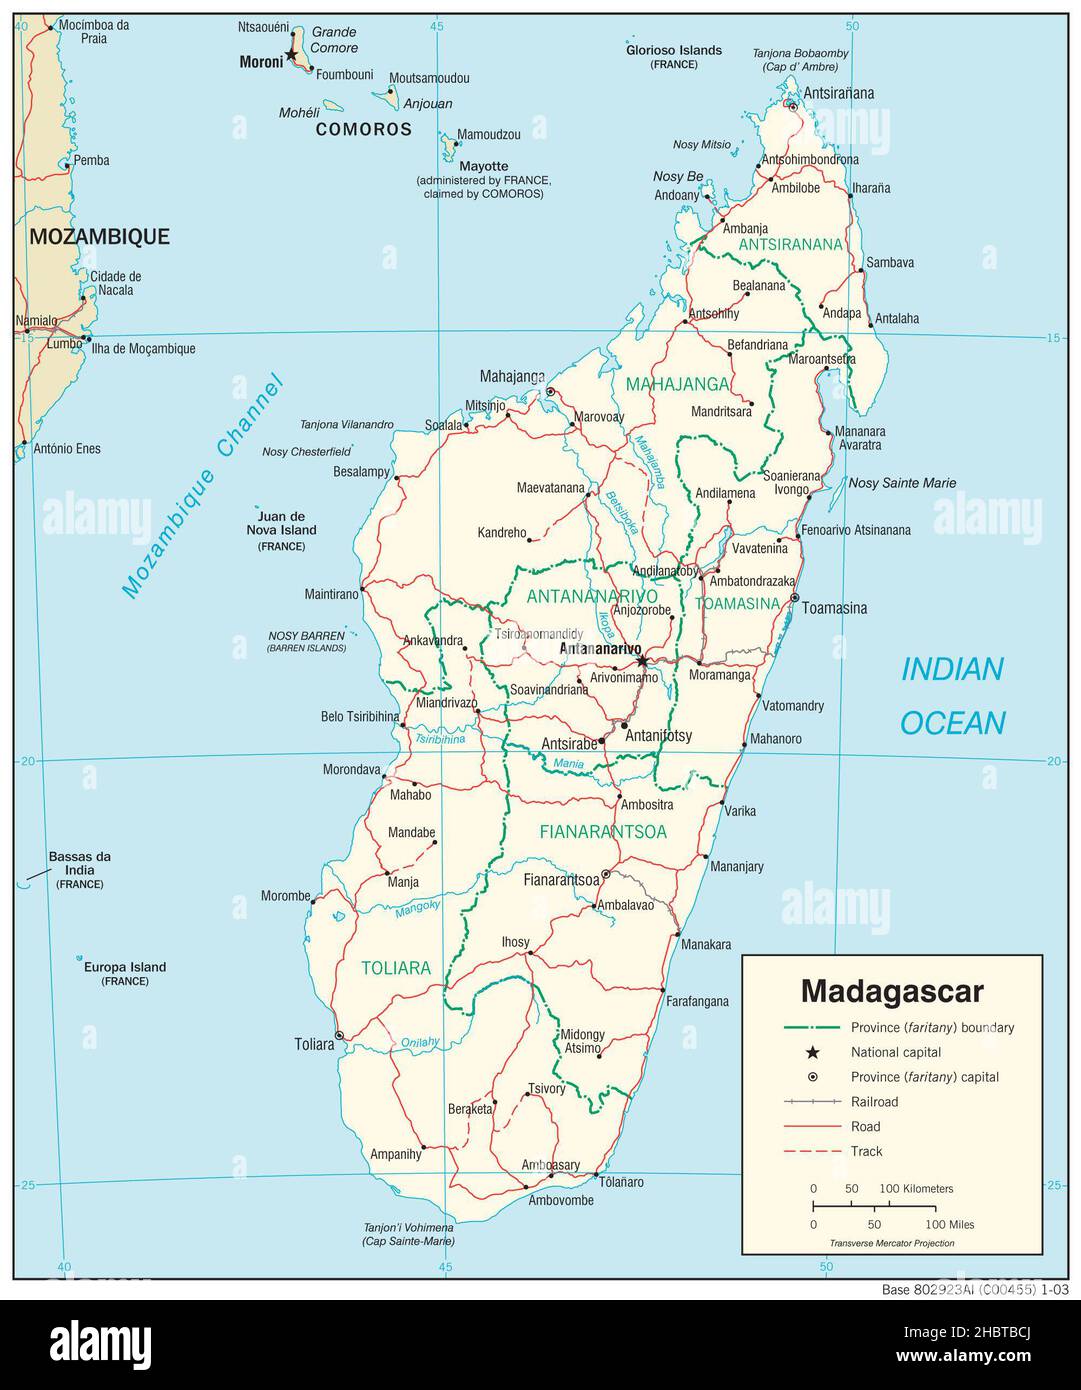 Мадагаскар карт 3. Остров Мадагаскар на карте. Политическая карта Мадагаскара. Физическая карта Мадагаскара. Остров Мадагаскар на карте Африки.